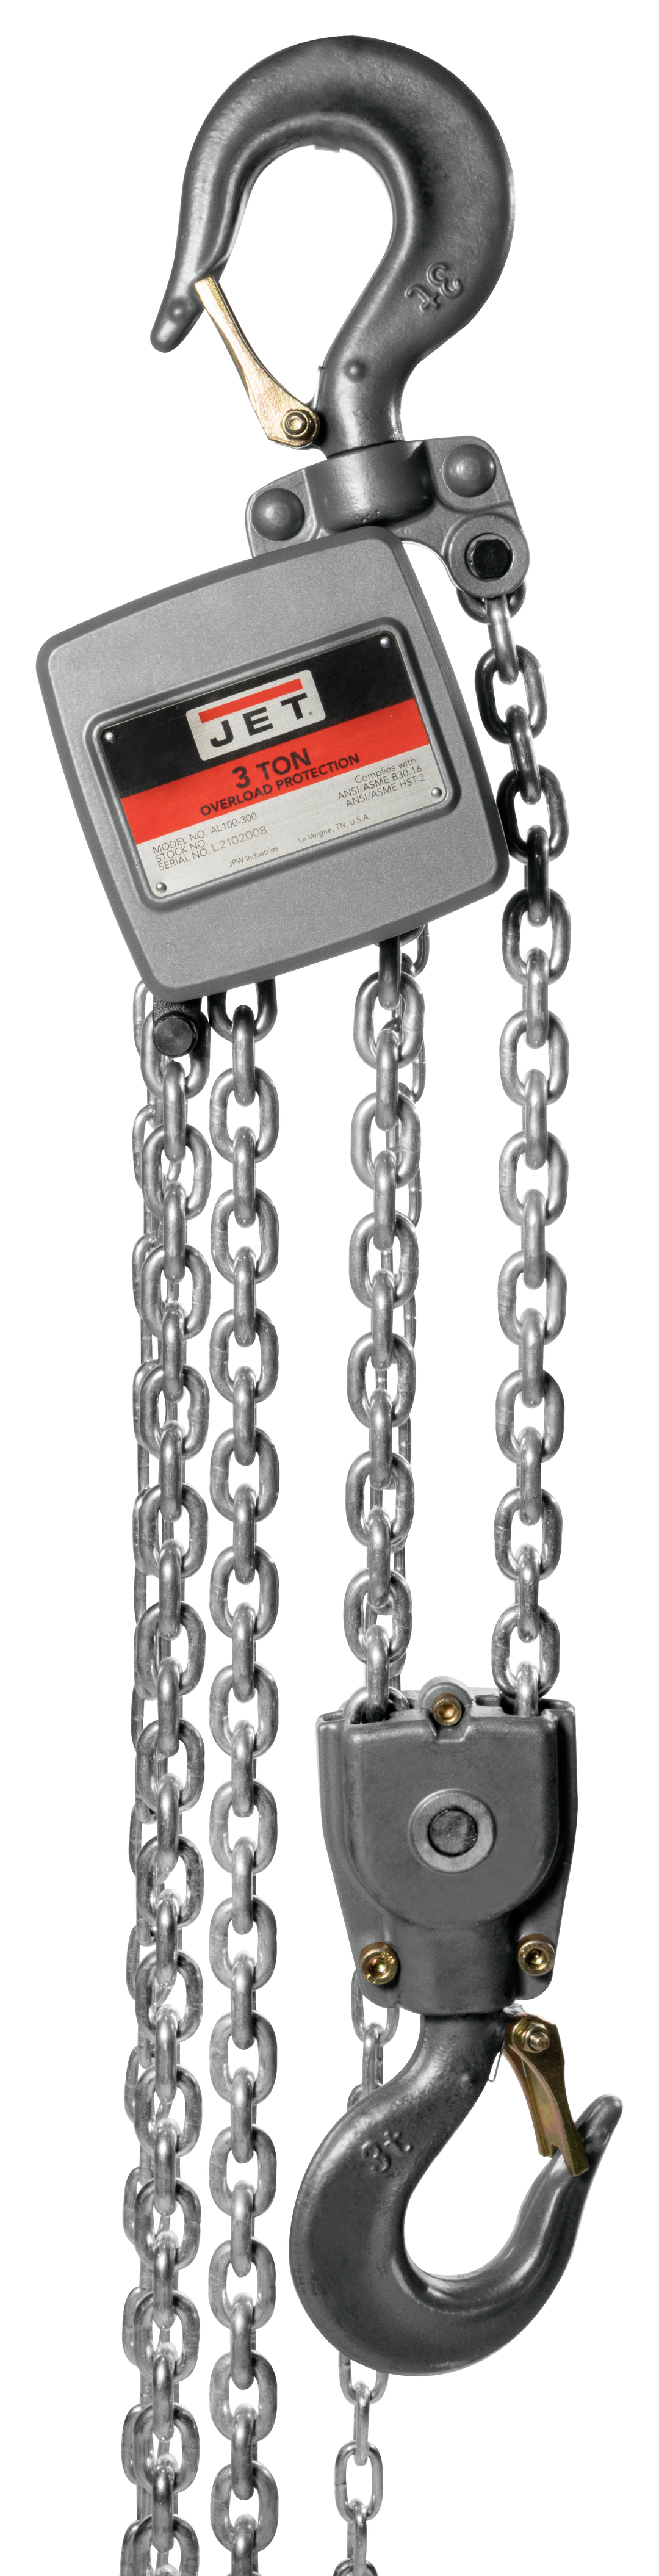 JET 3-Ton Aluminum Hand Chain Hoist